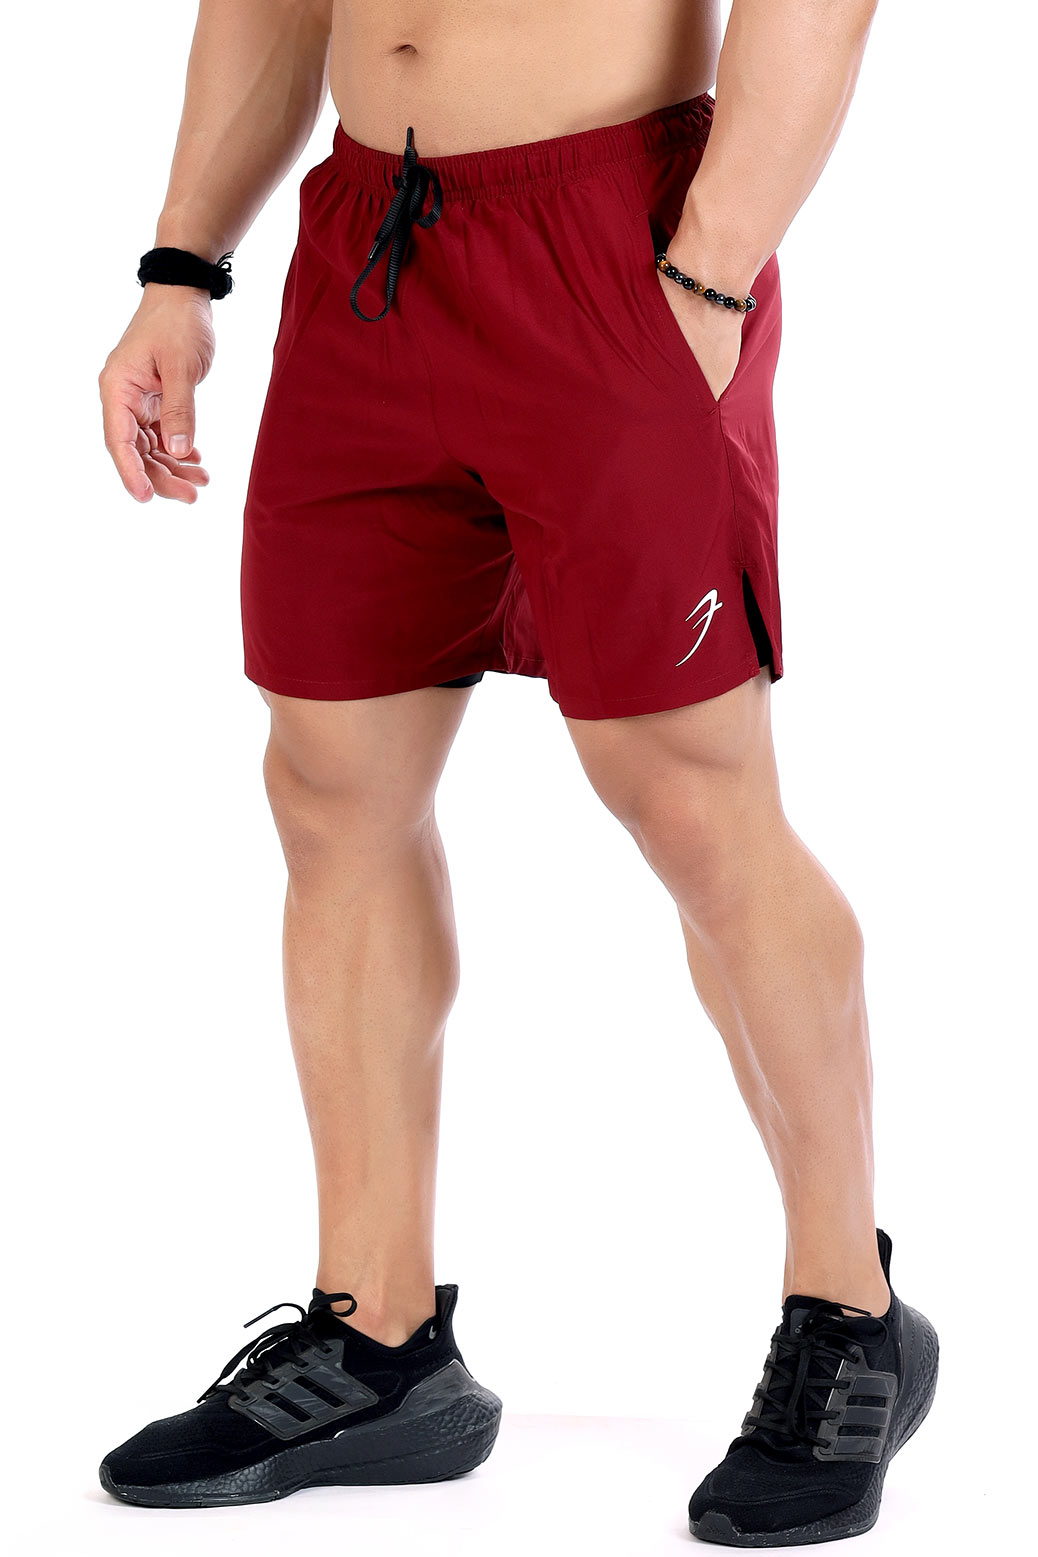 Buy Maroon Compression Shorts for men online